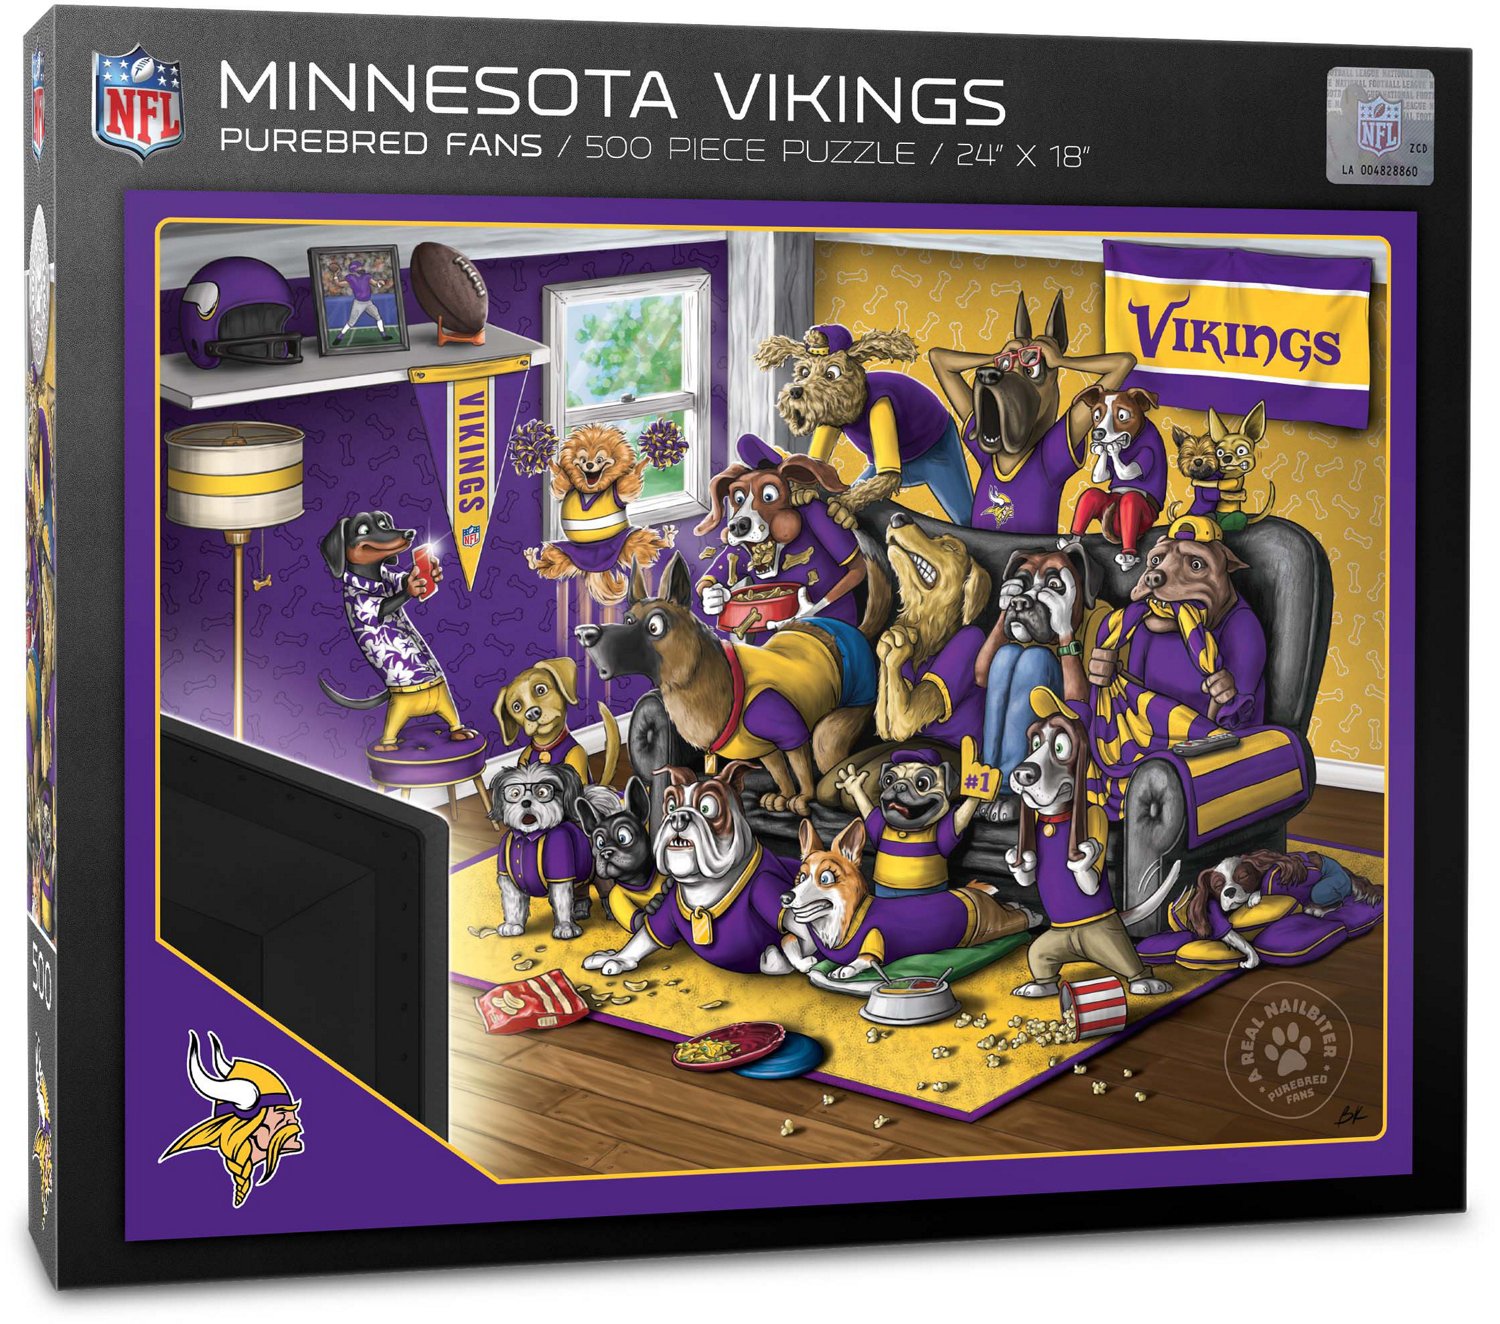 Franklin Minnesota Vikings Youth NFL Football Receiver Gloves